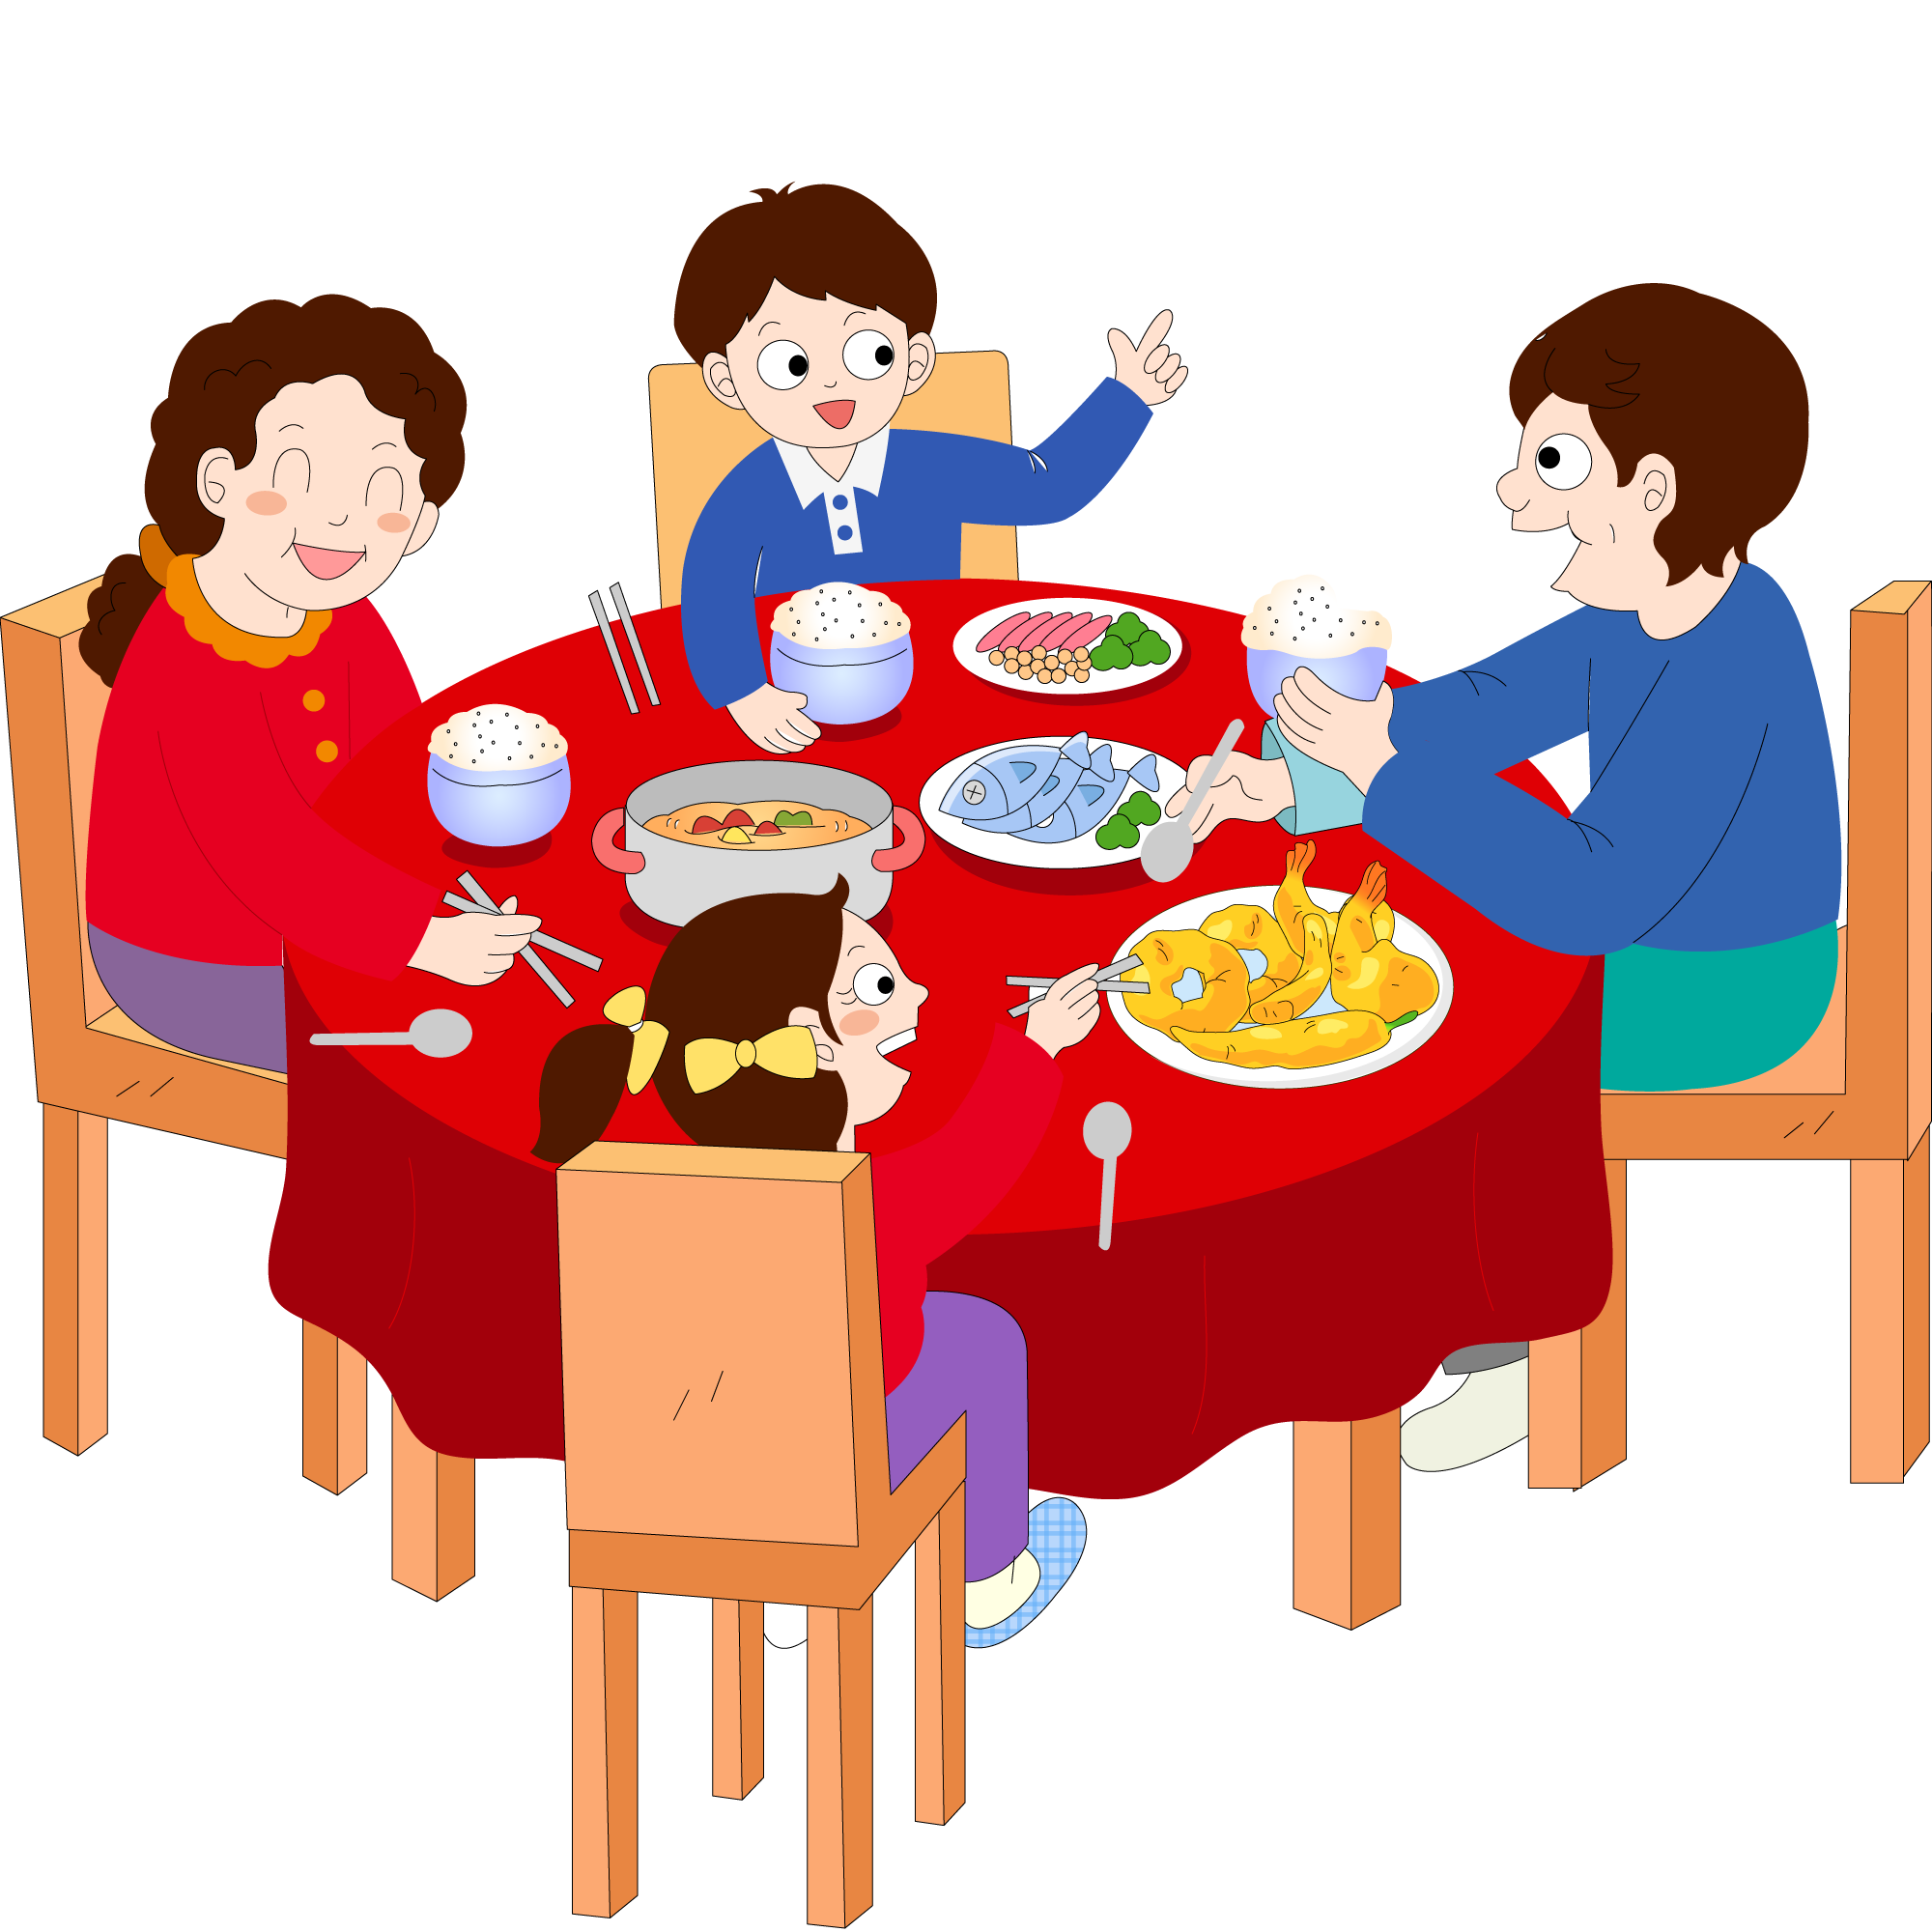 Сяду за обед. Дети за столом обедают. Семья обедает за столом. Мультяшная семья за столом. ДОУ семья за столом.